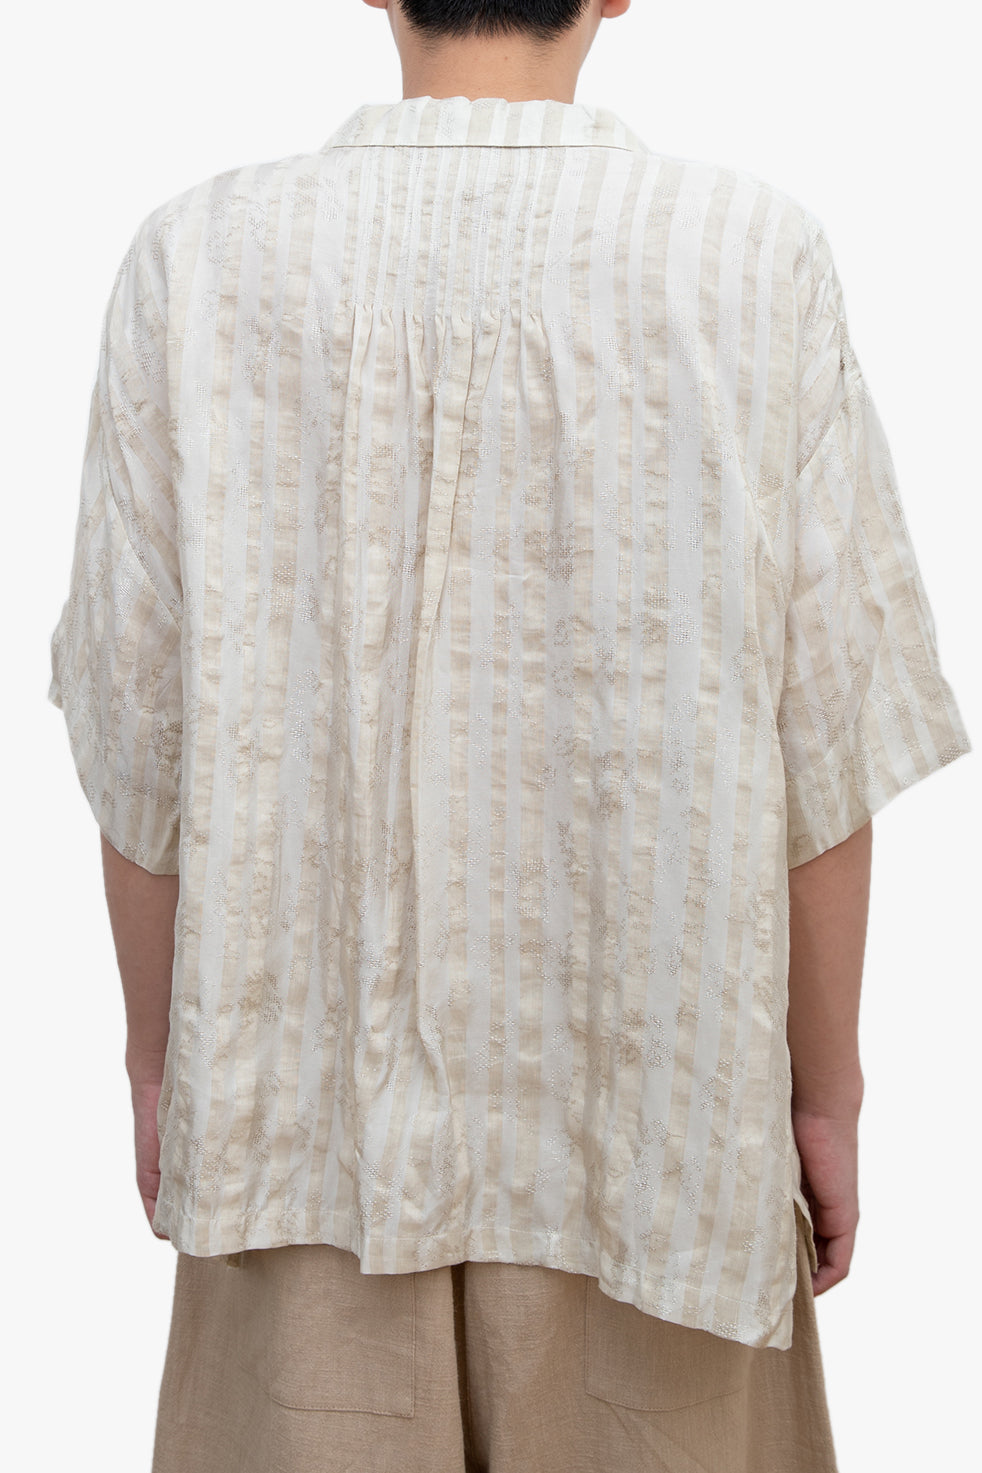 Le KAYURI embroidery short shirt Beige